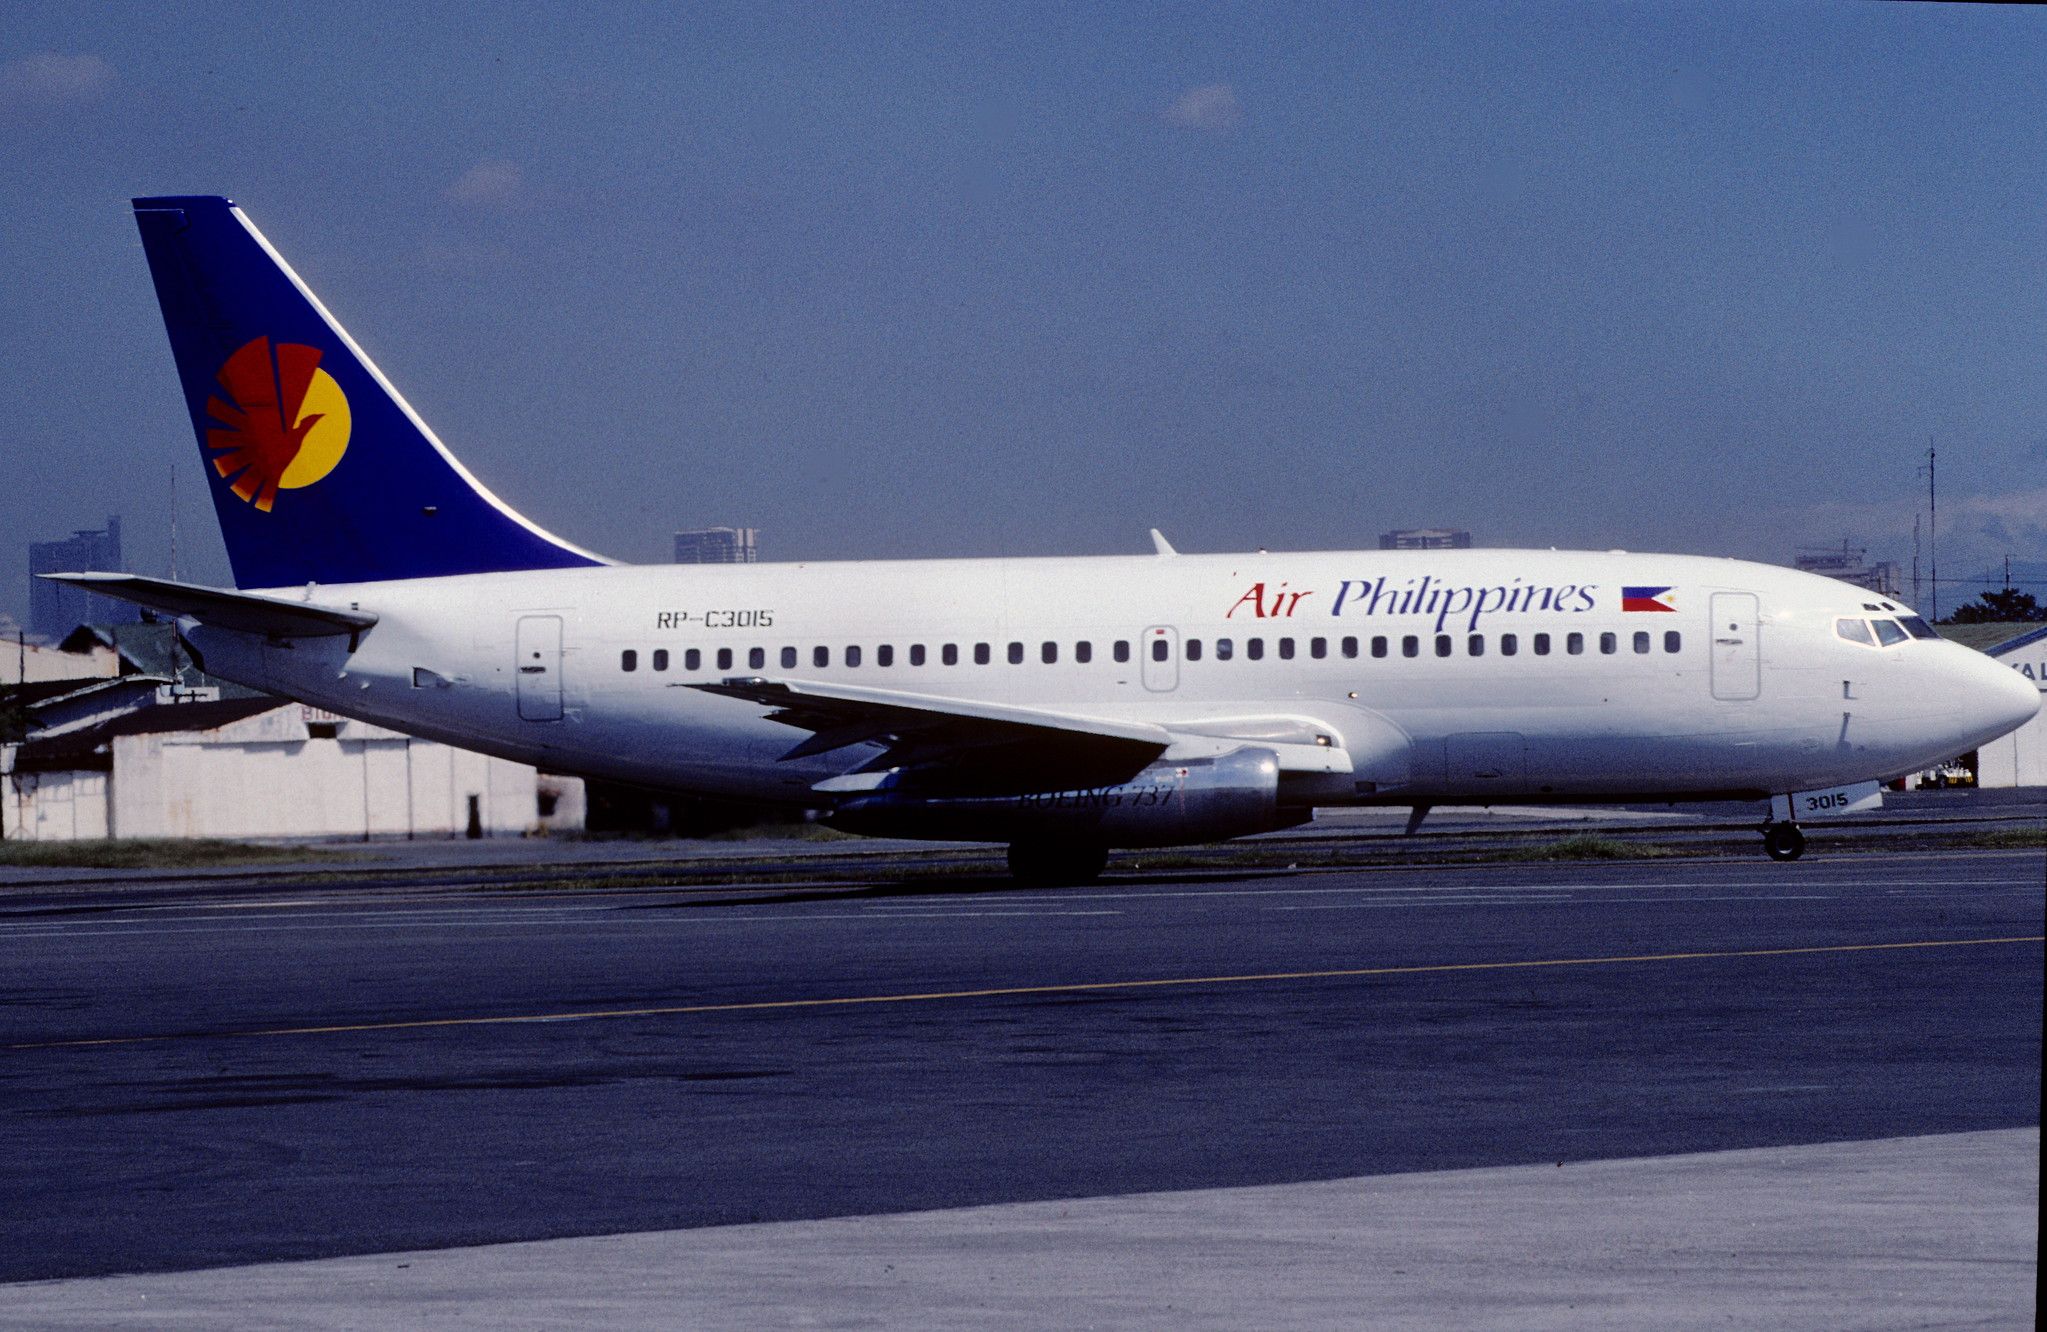 Air Philippines Boeing 737-200